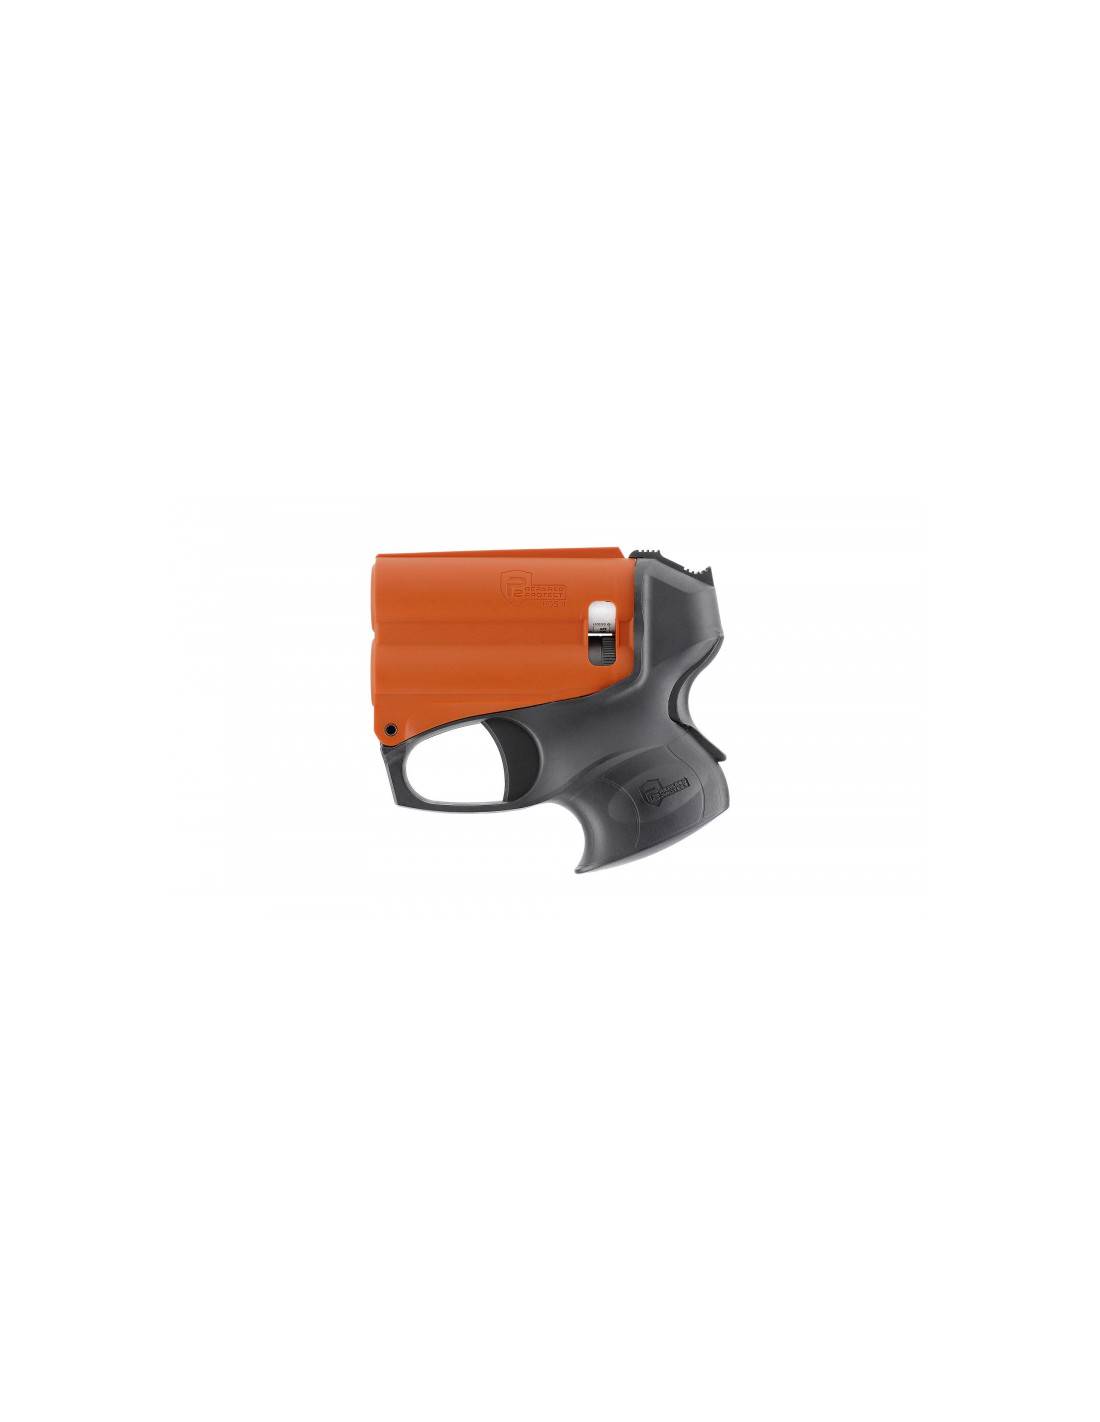 Pistola Spray al Peperoncino Walther PDP Umarex Nera